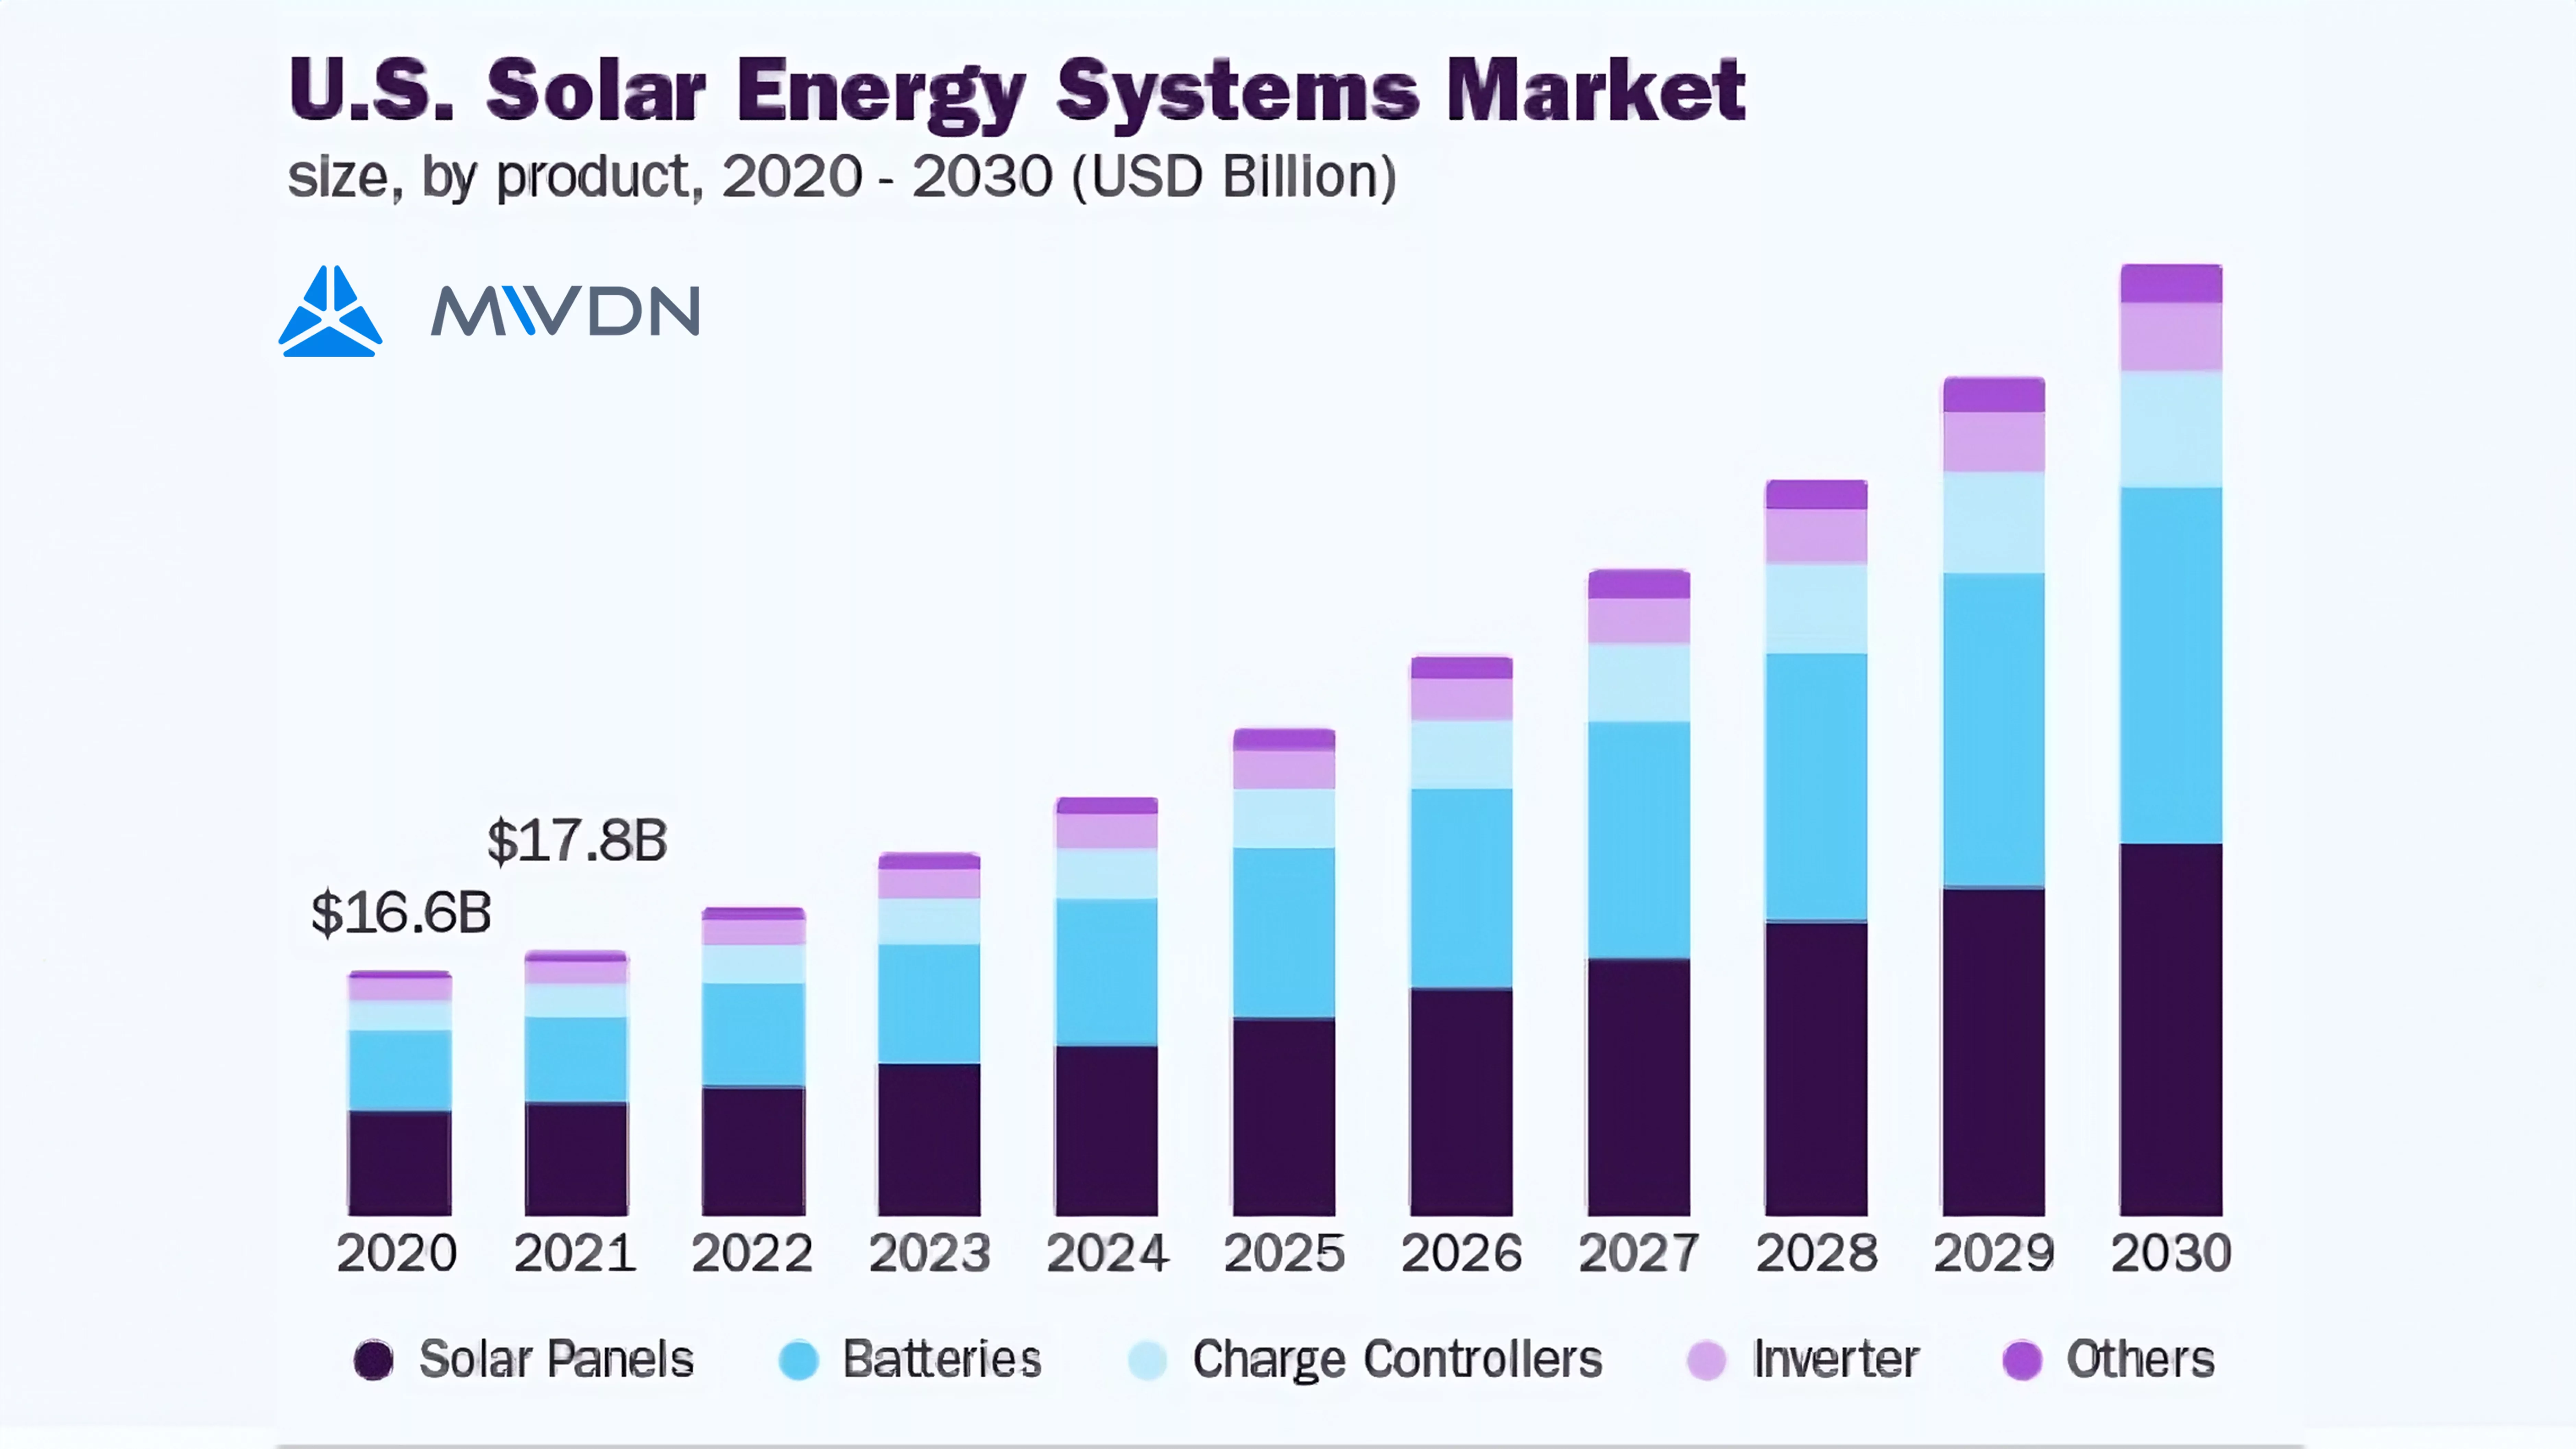 Solar energy systems market size